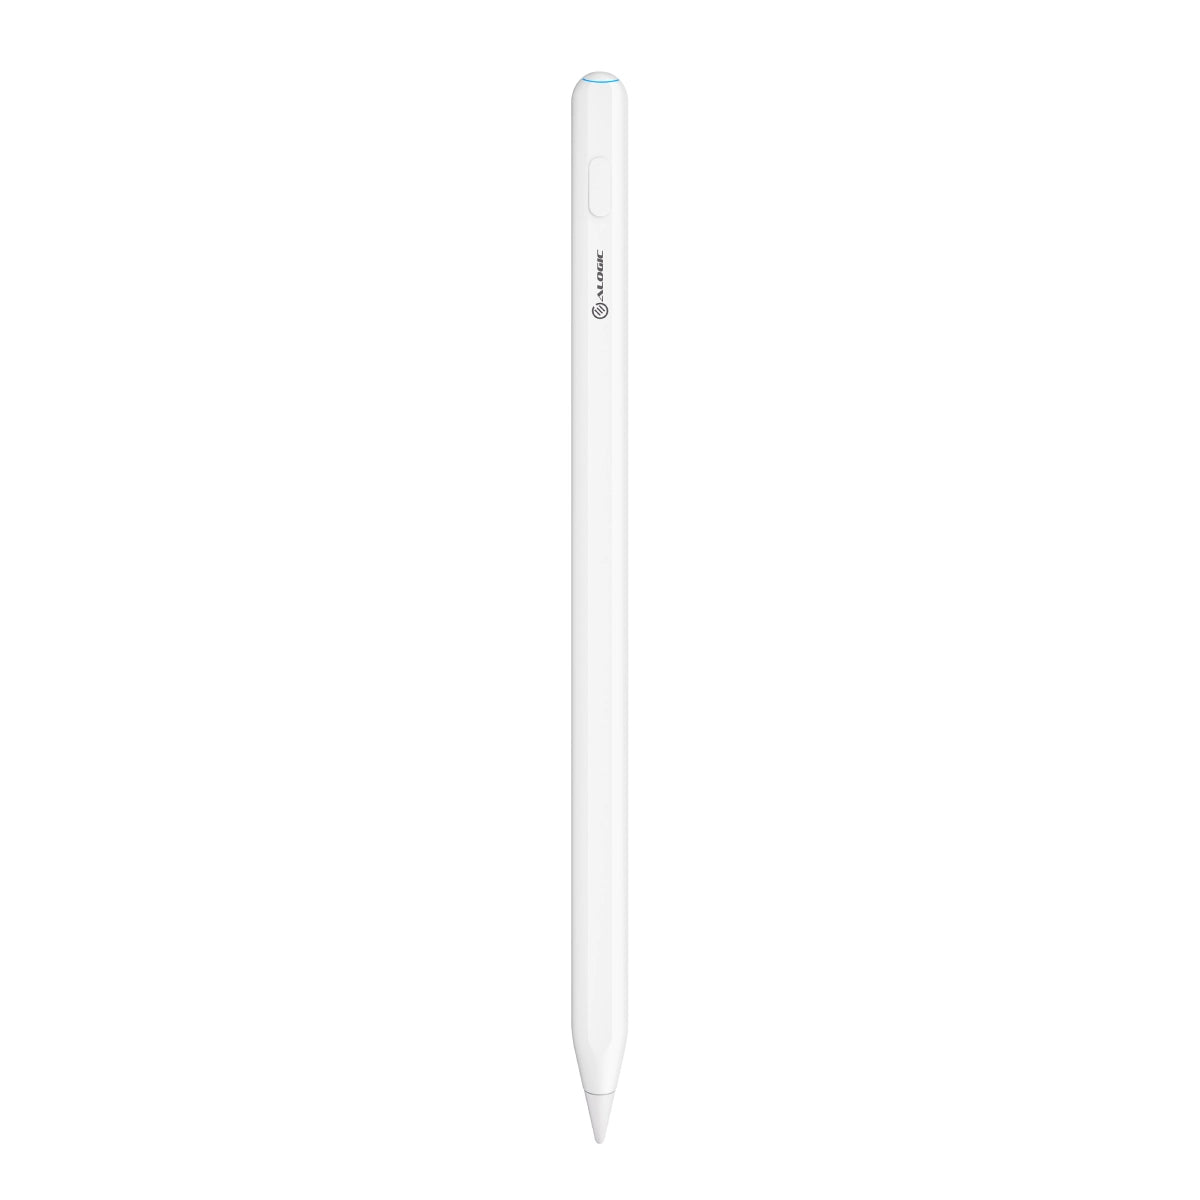 iPad Stylus Pen with USB-C & Wireless Charging